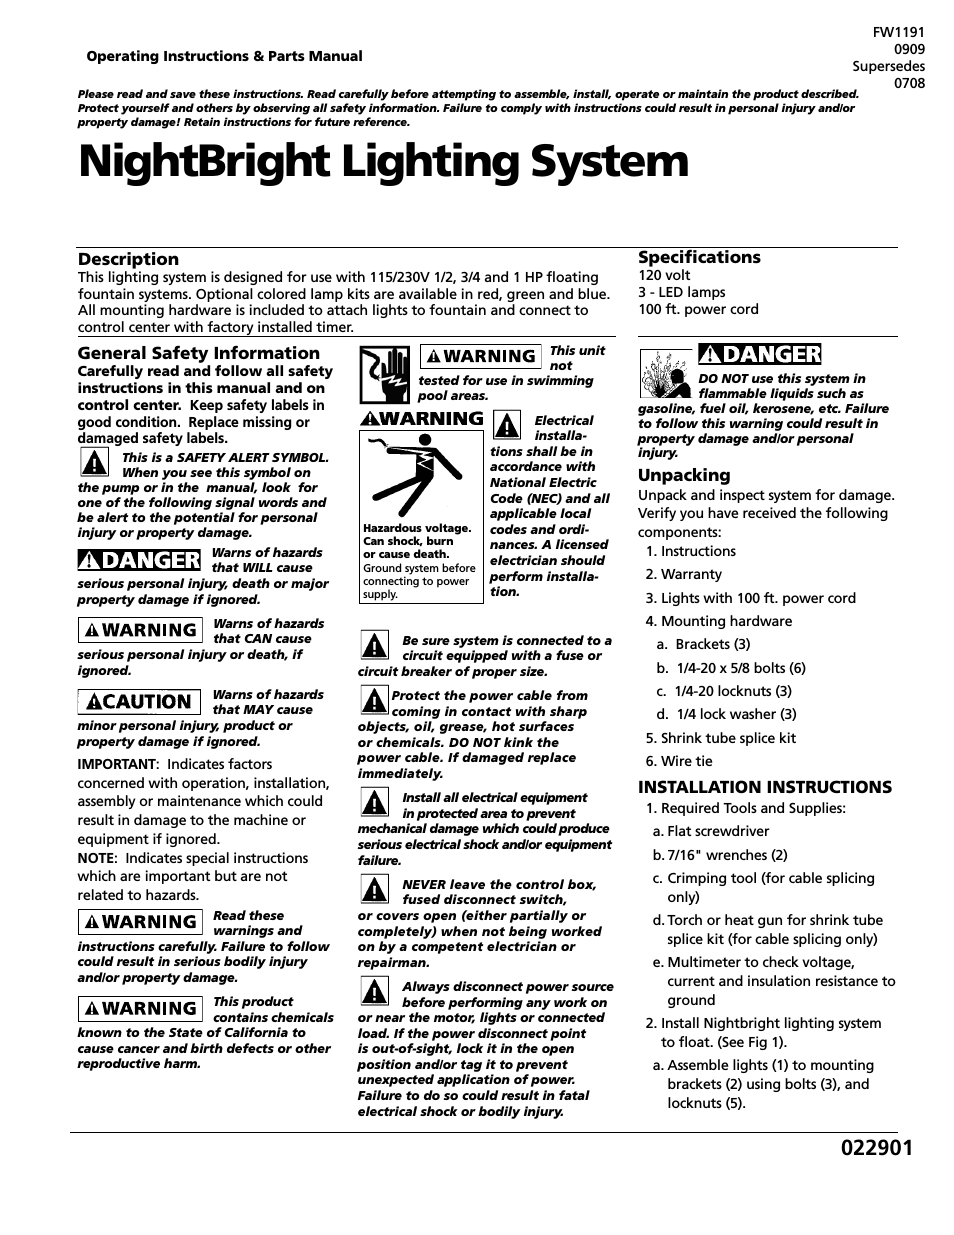 NightBright Lighting System